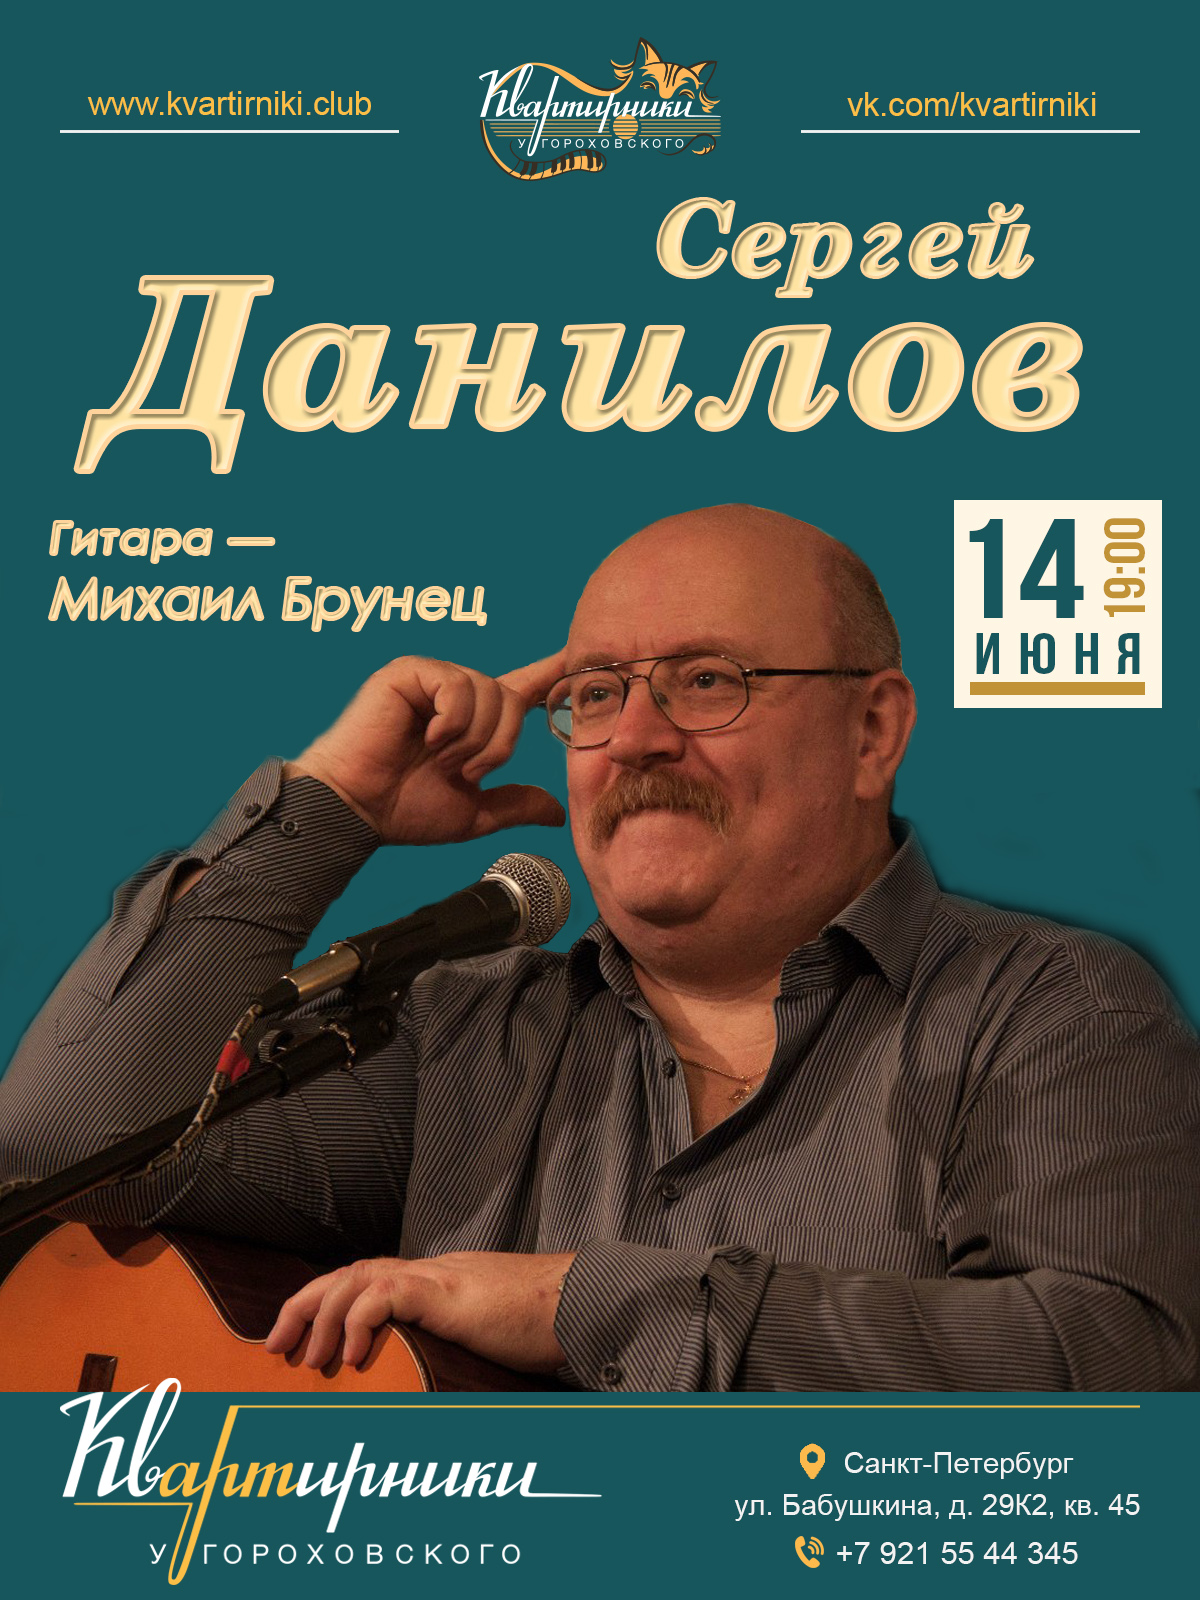 Сергей ДАНИЛОВ. афиша